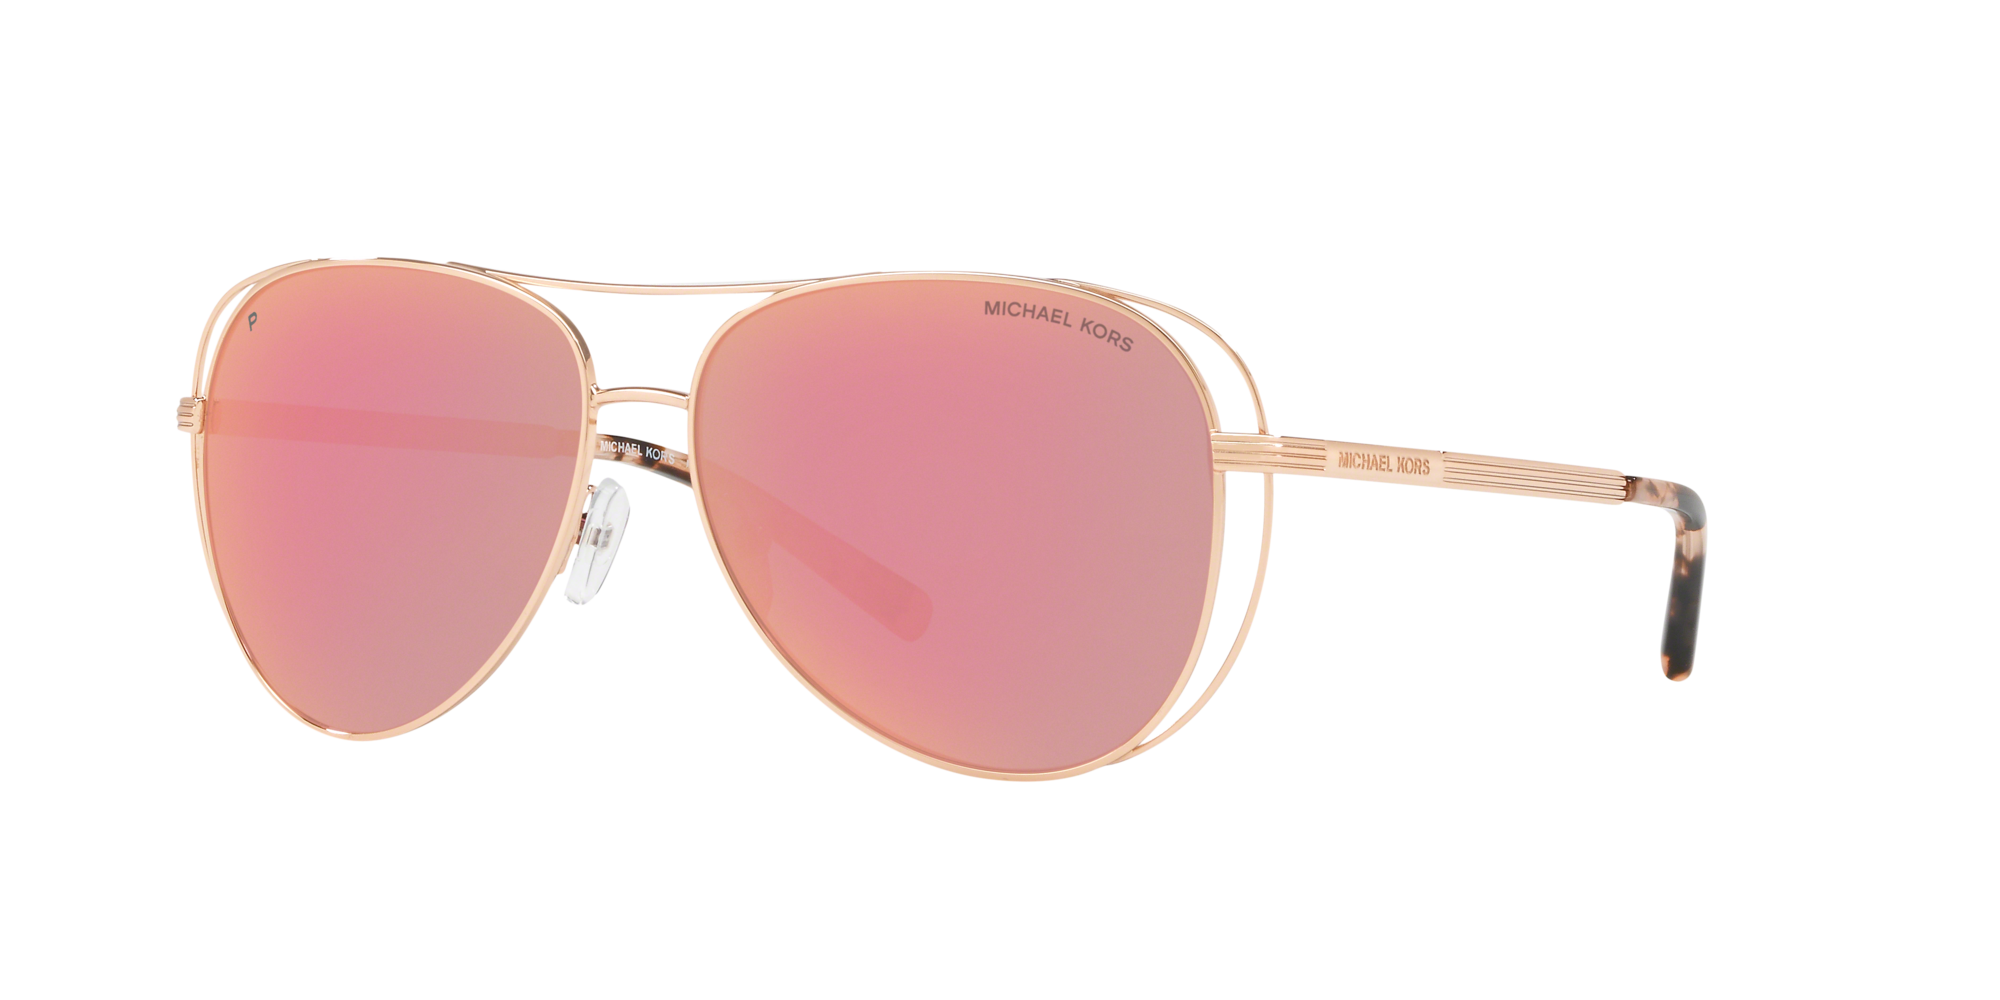 michael kors sunglasses pink